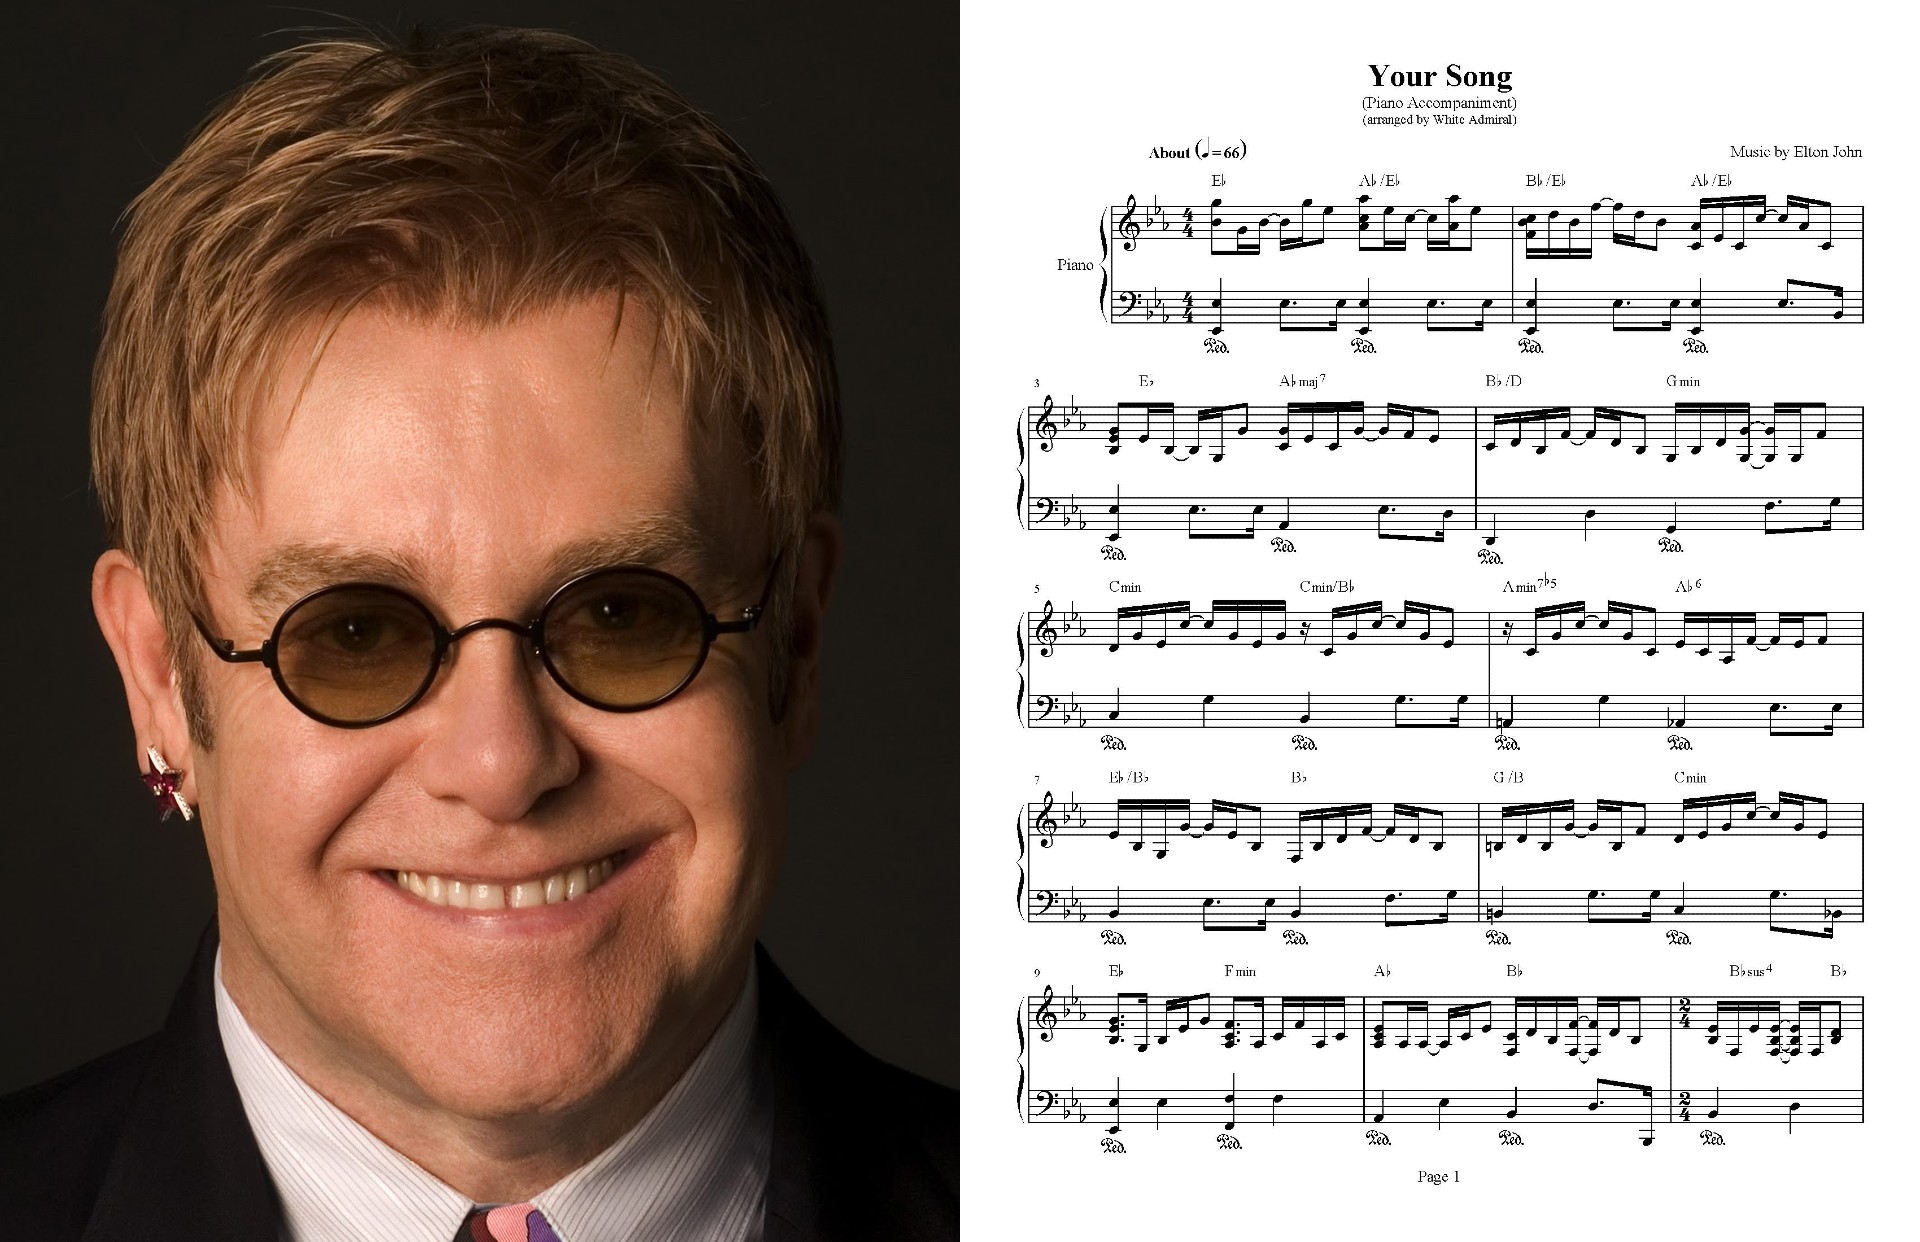 Your Song - Elton John (Piano Accompaniment).jpg